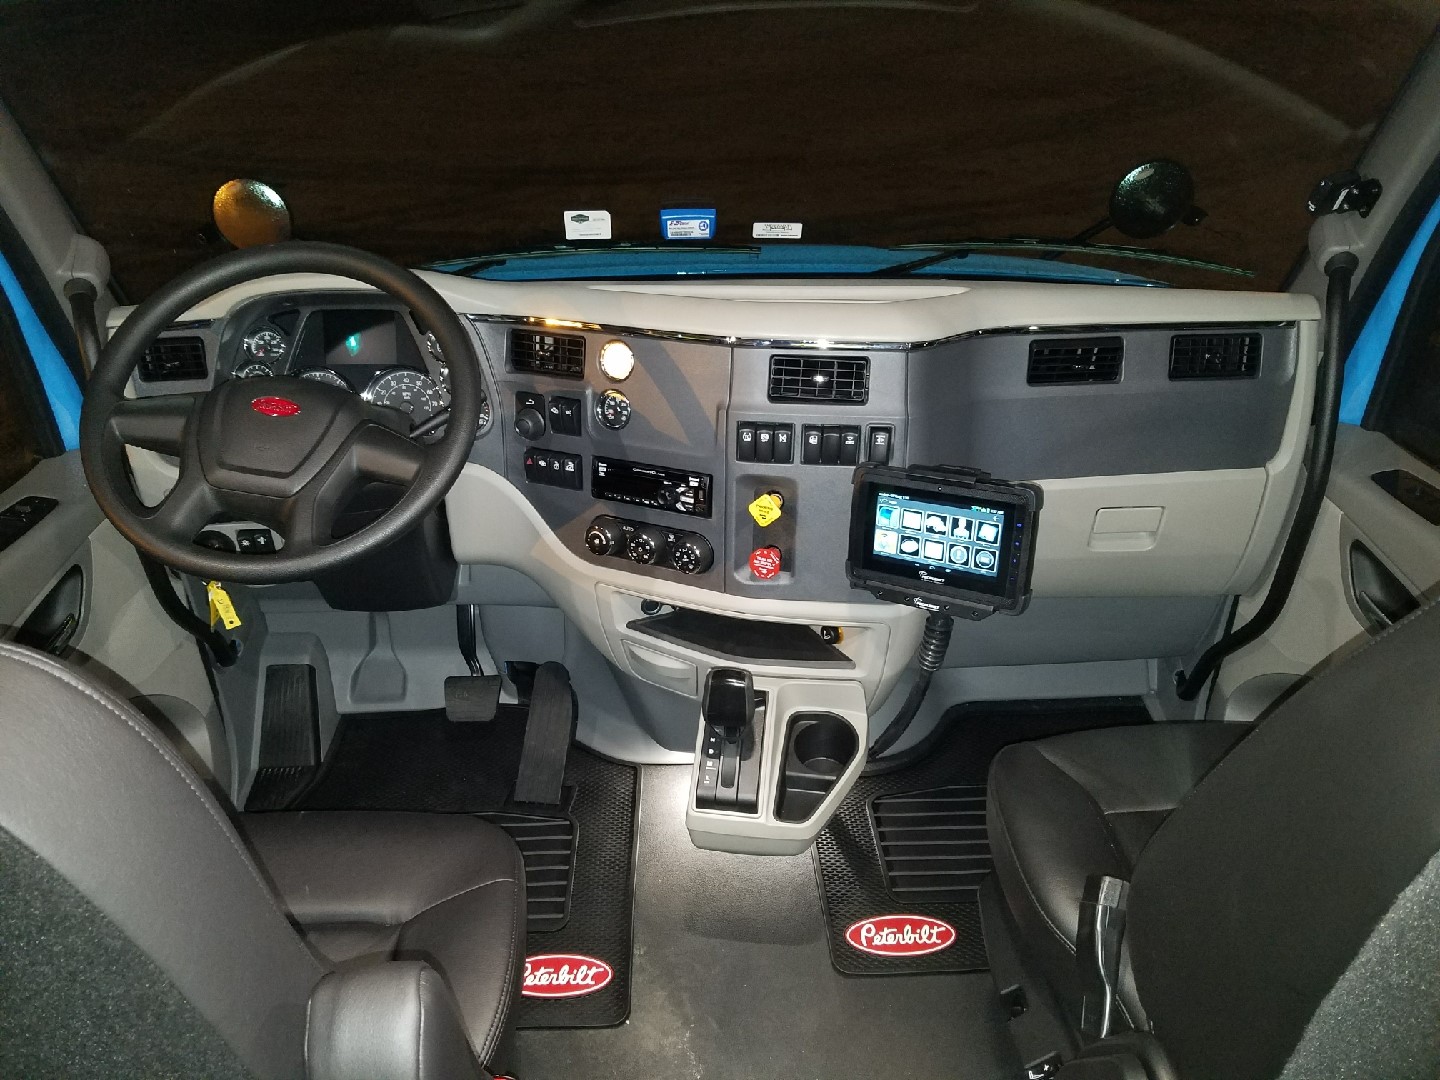 Interior of truck